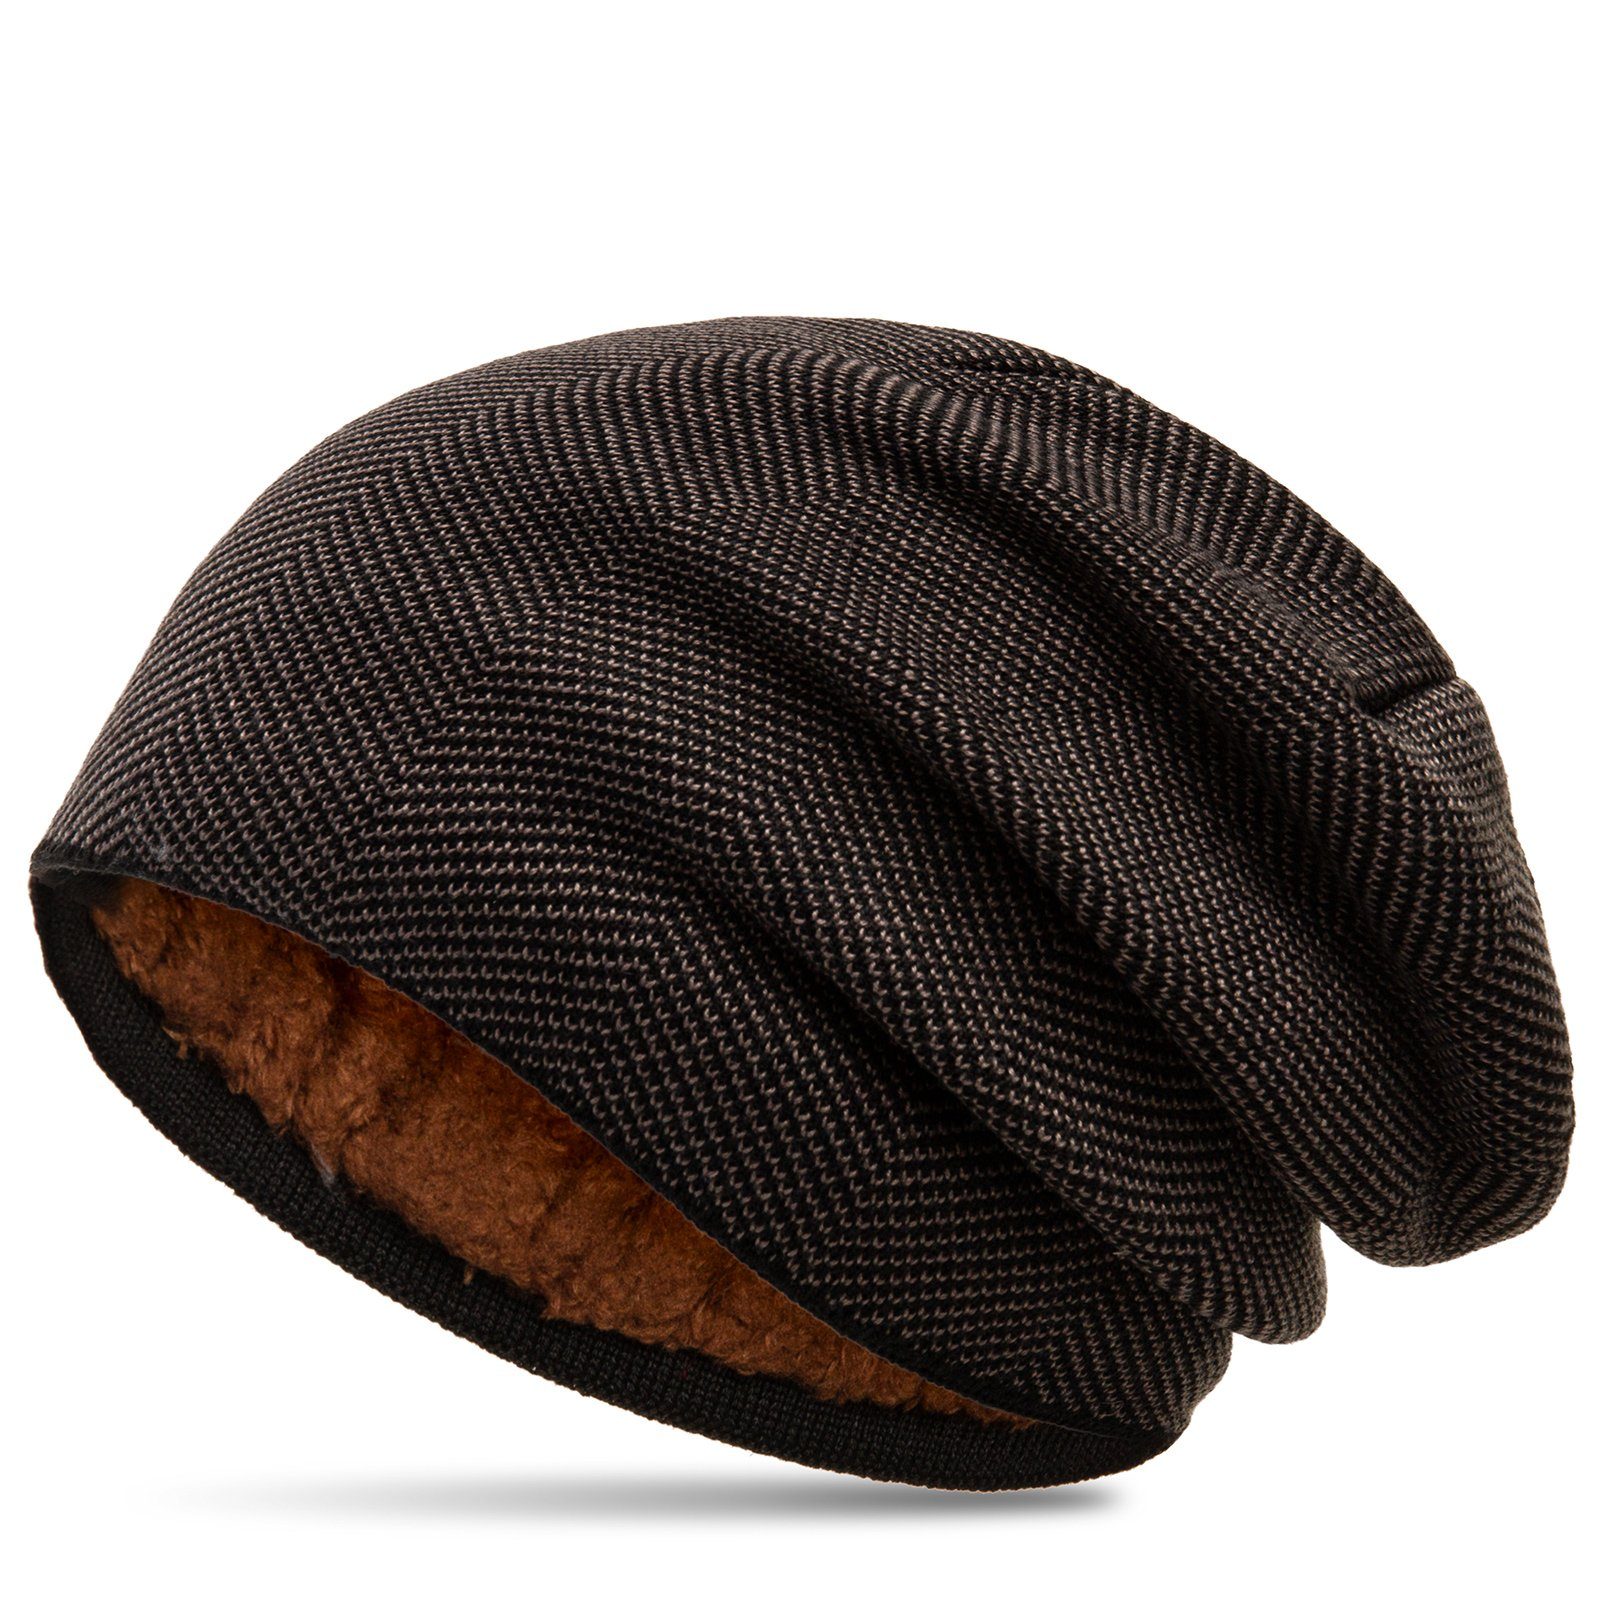 Caspar Beanie MU201 warme Feinstrick Beanie Mütze mit Fleece gefüttert khaki | Beanies